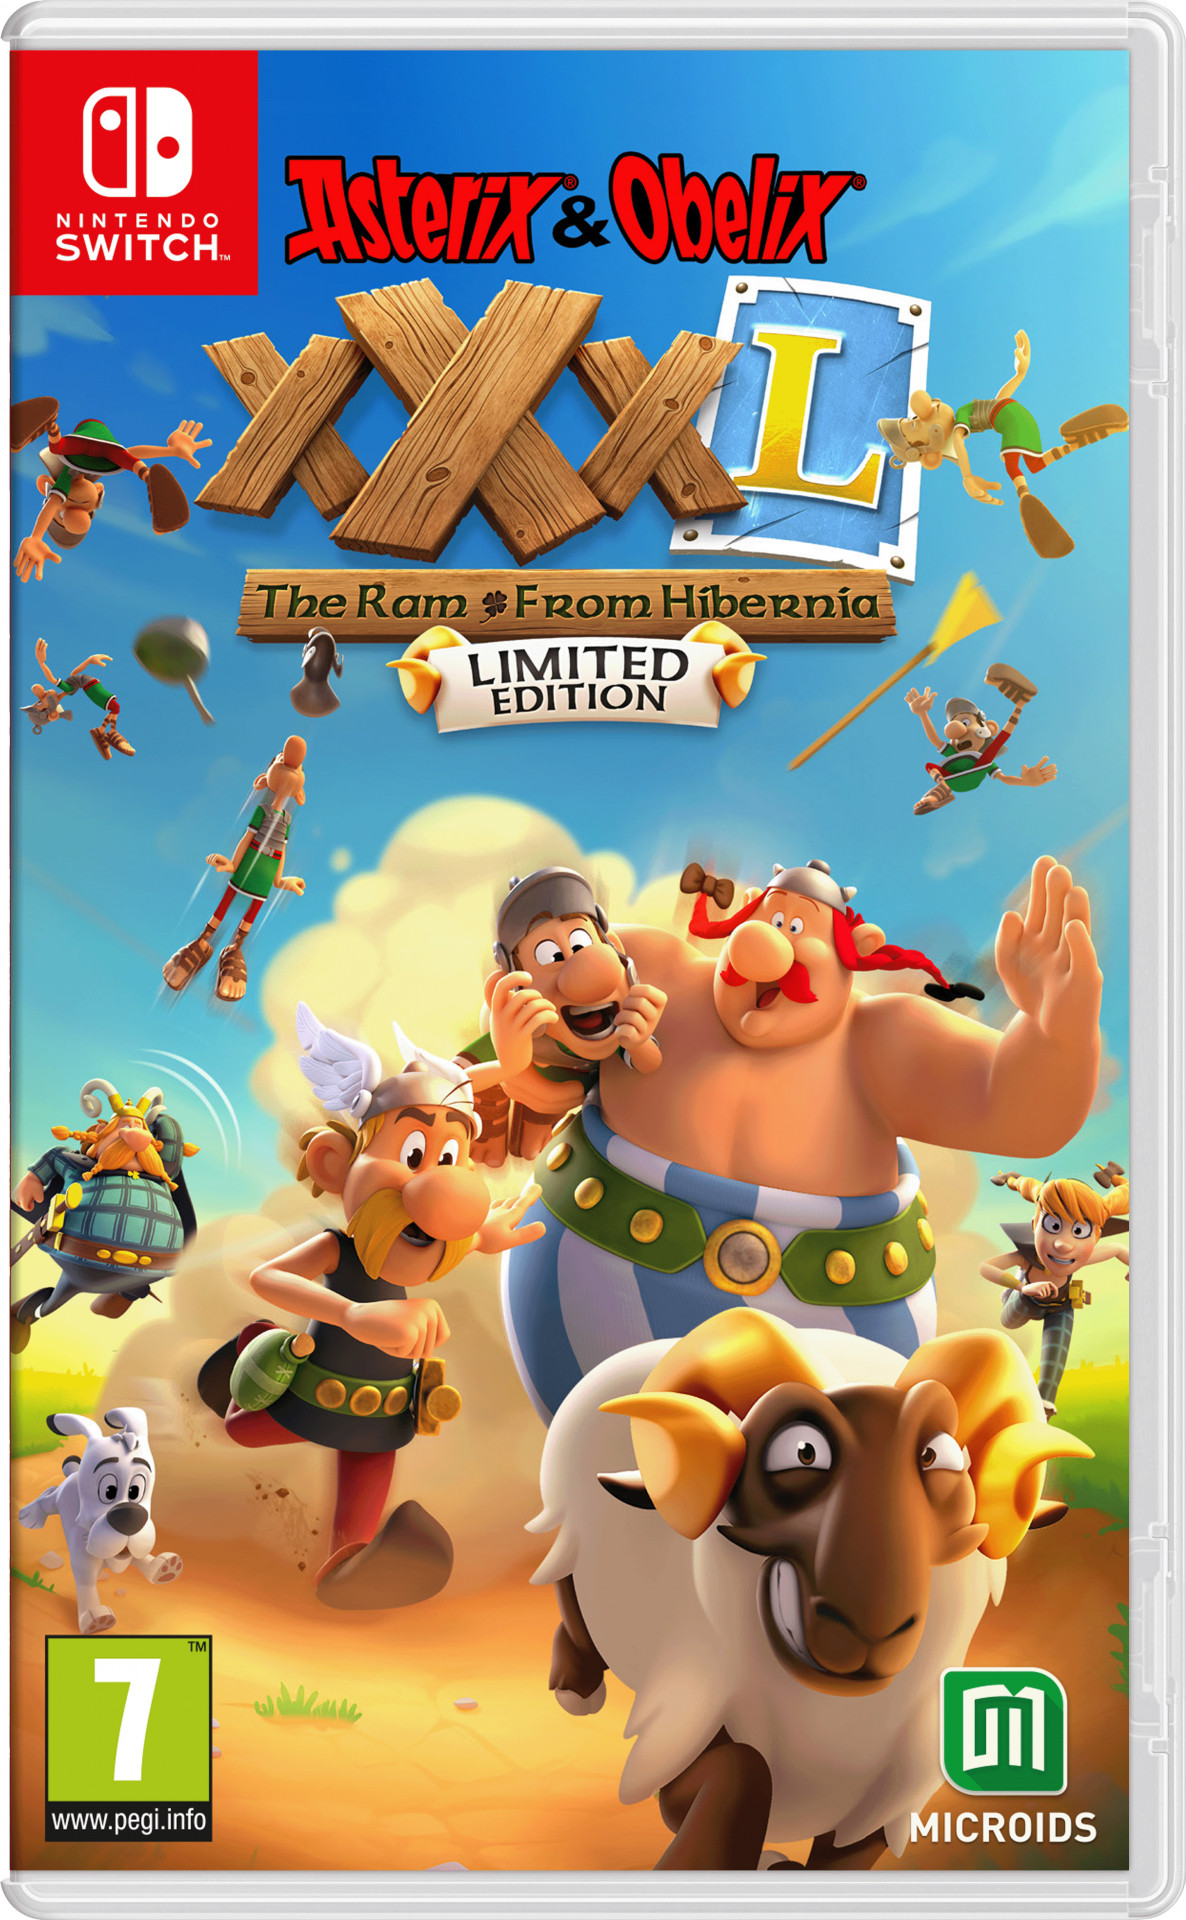 Andes Overtollig Noord Amerika Nedgame gameshop: Asterix & Obelix XXXL: The Ram From Hibernia Limited  Edition (Nintendo Switch) kopen - aanbieding!